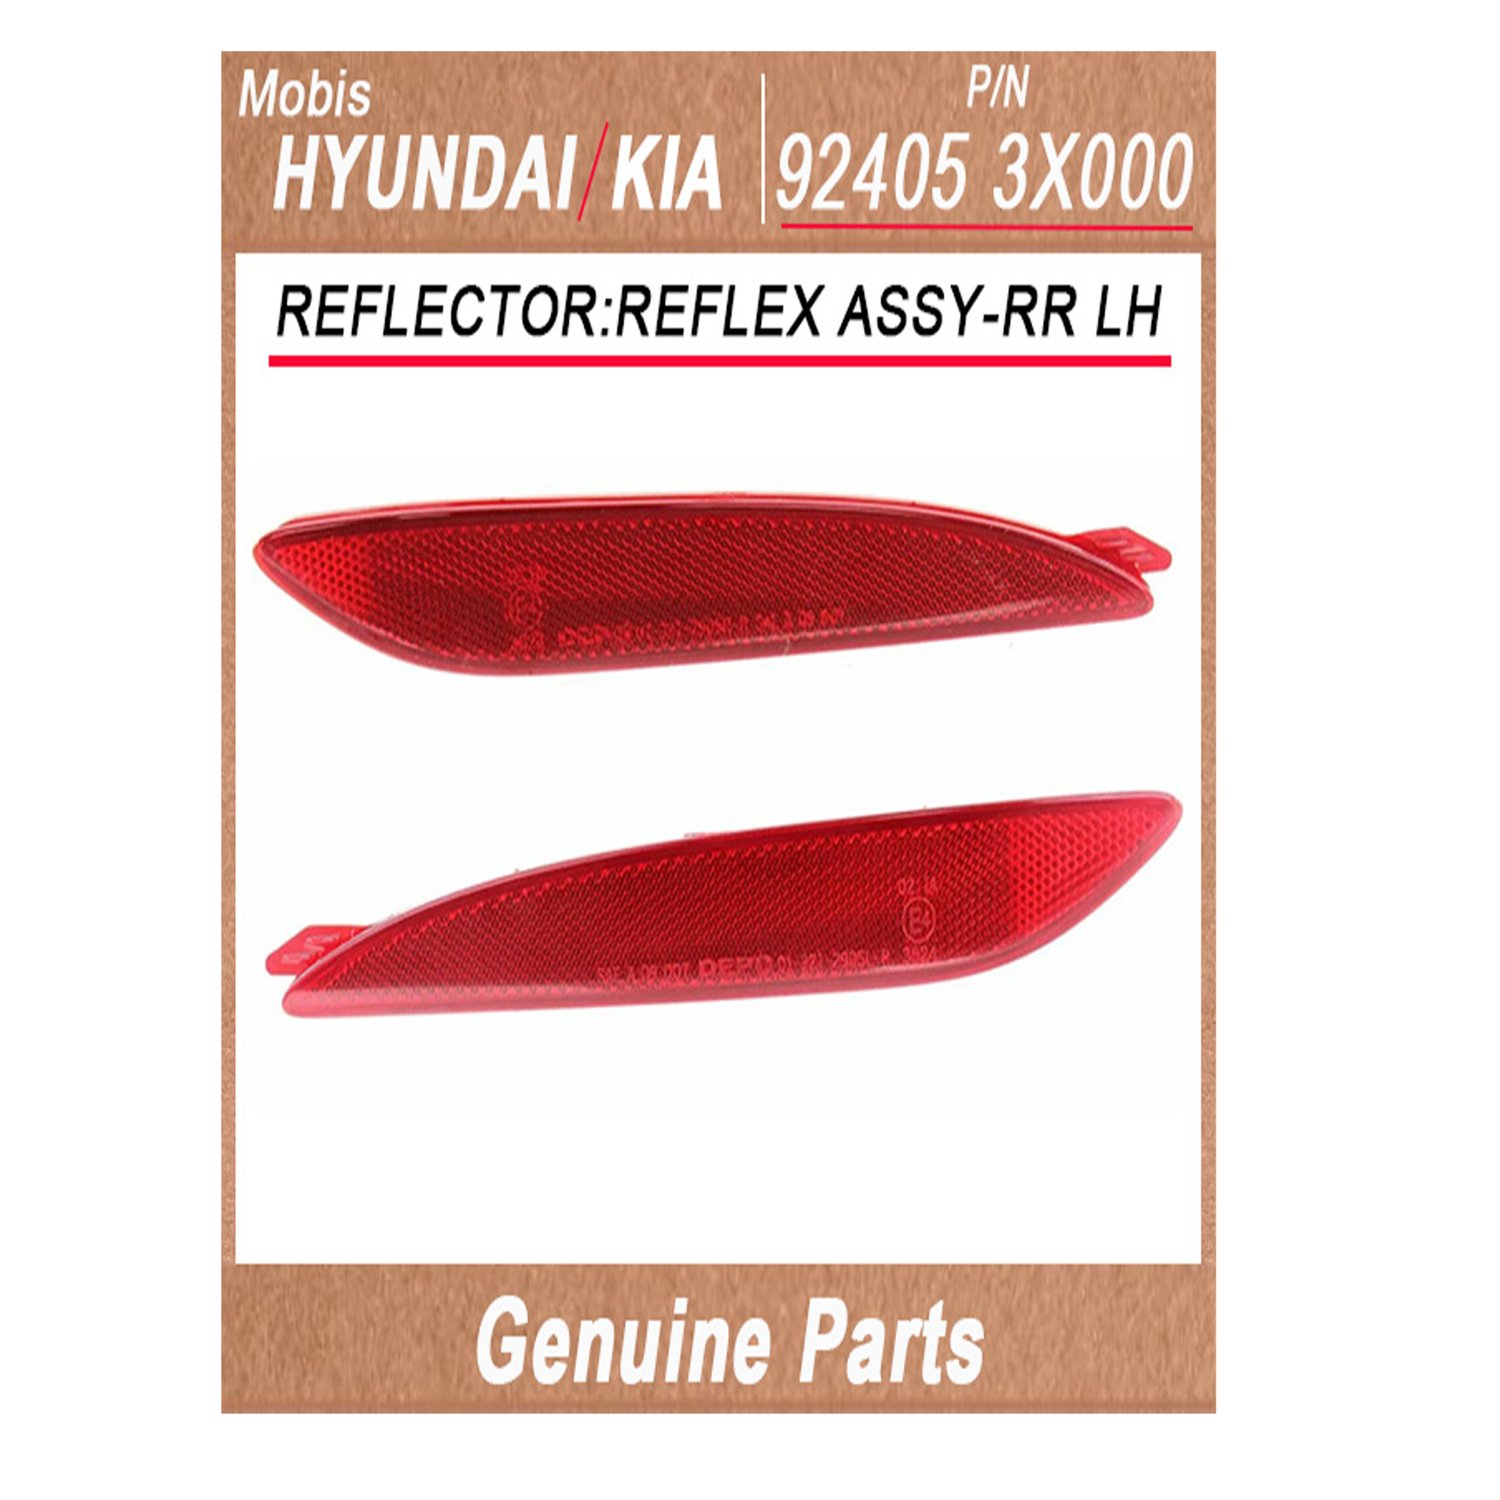 924053X000 _ REFLECTOR_REFLEX ASSY_RR LH _ Genuine Korean Automotive Spare Parts _ Hyundai Kia _Mobi